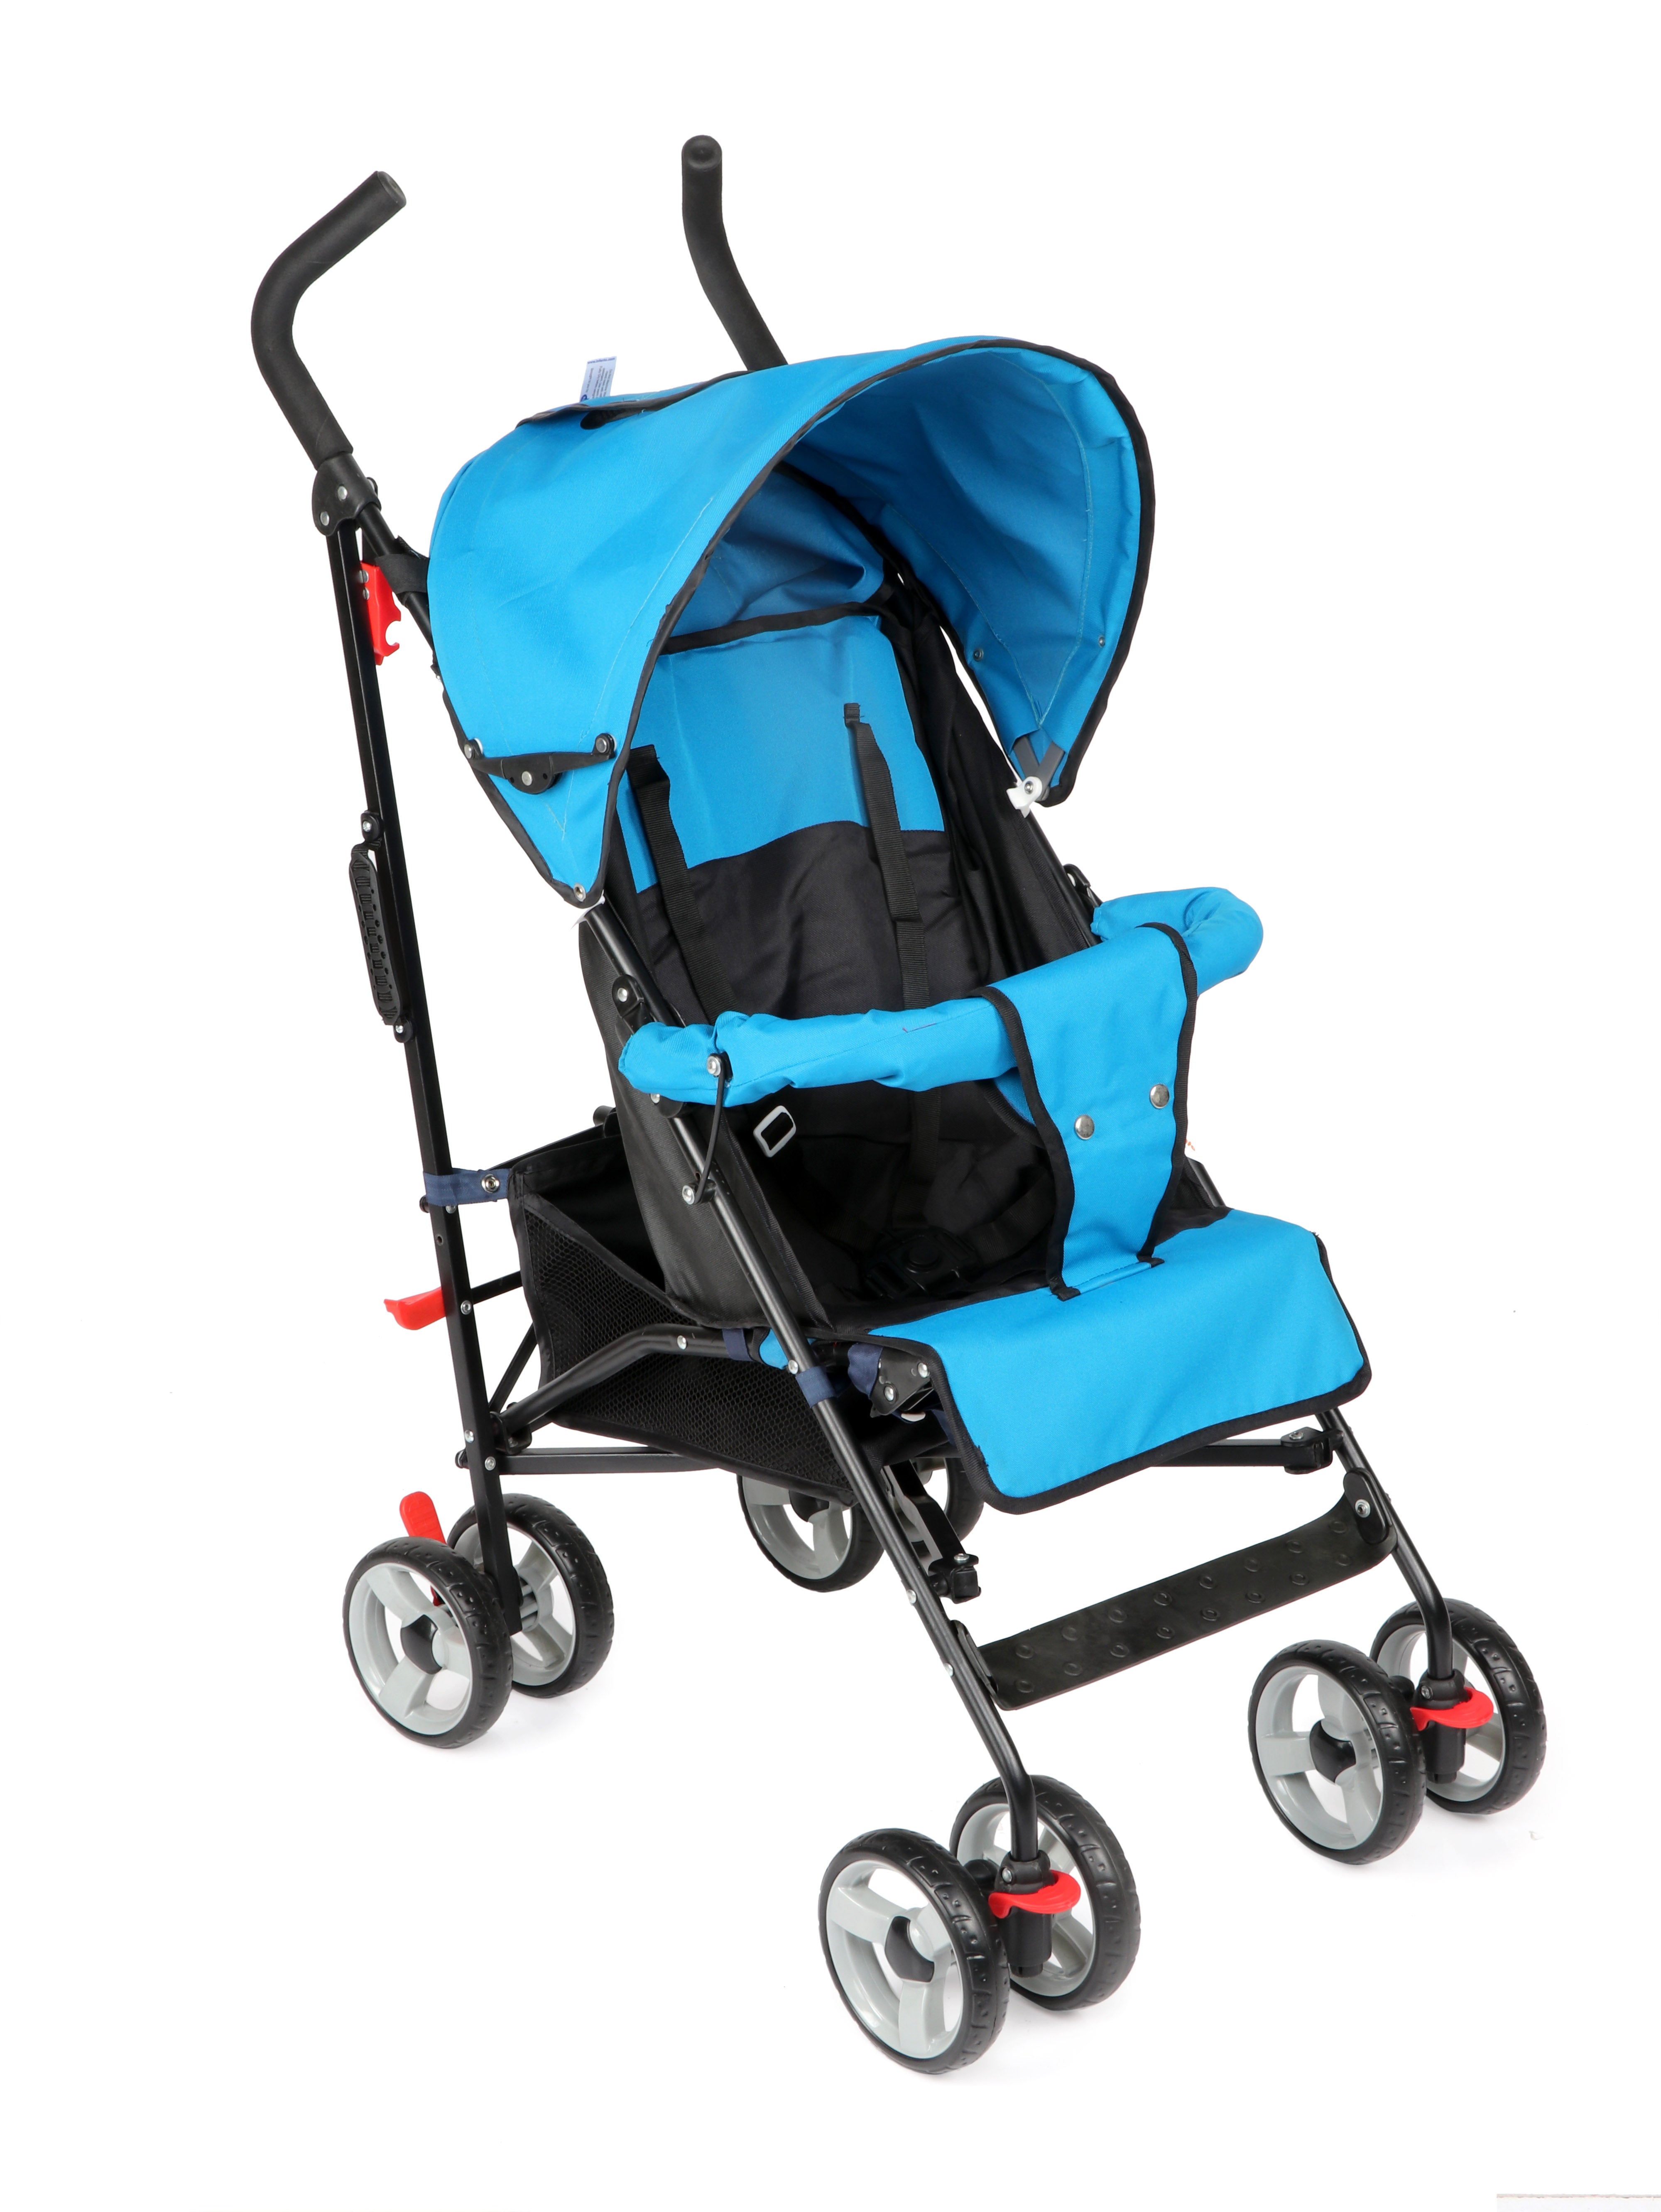 INFANTO Zippy Buggy - Premium Baby Stroller/Pram  for 0-3 Years - Baby Girl Boy Gift